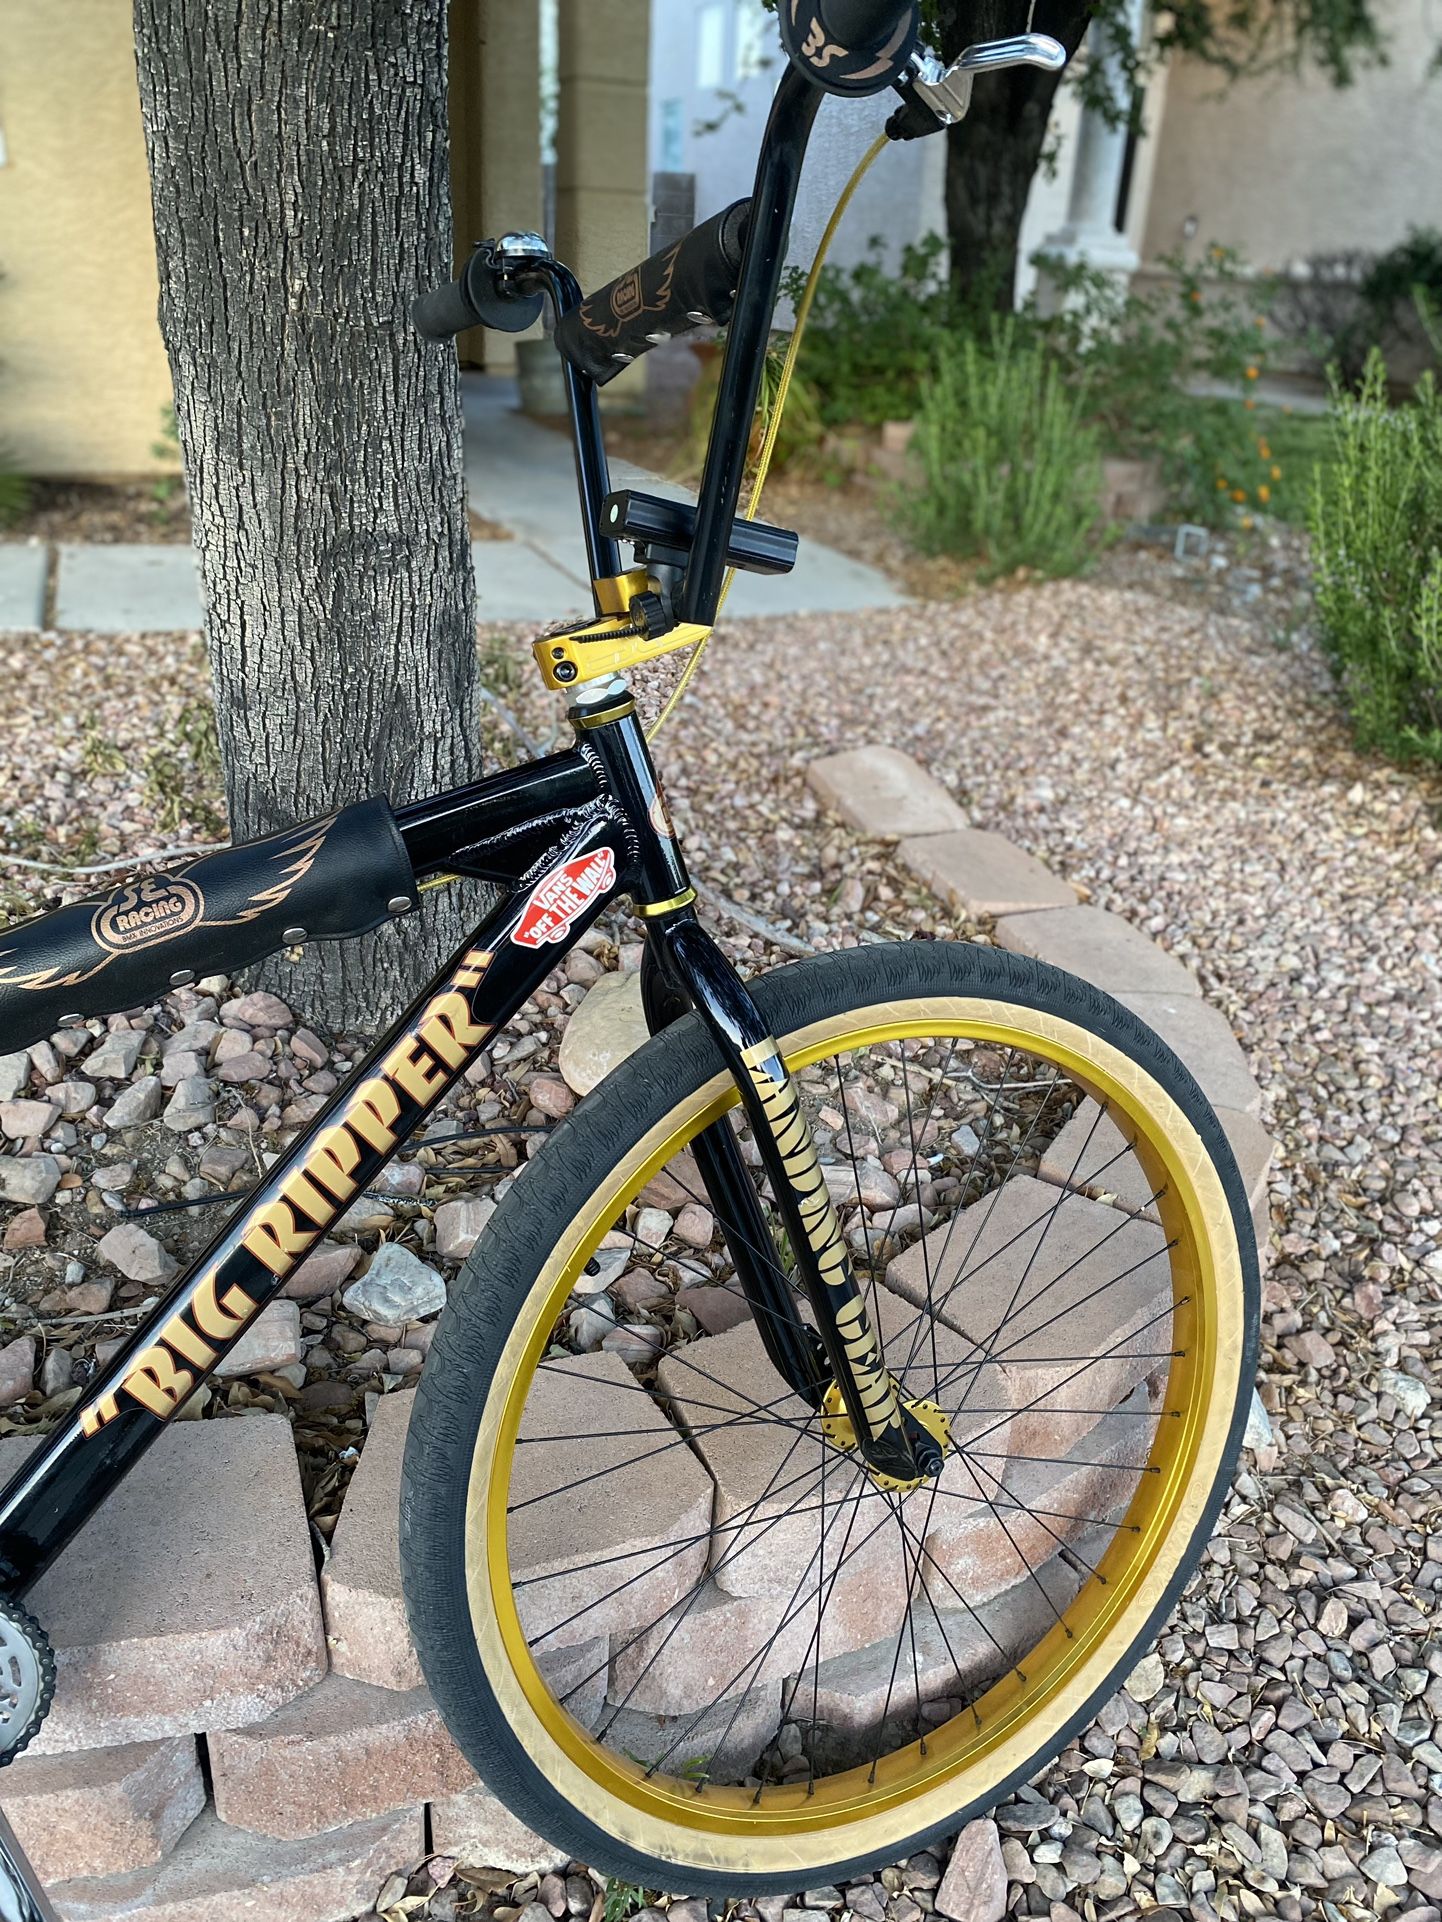 SE Bikes Big Ripper 29-inch - Las Vegas Cyclery, Las Vegas, Nevada 89135